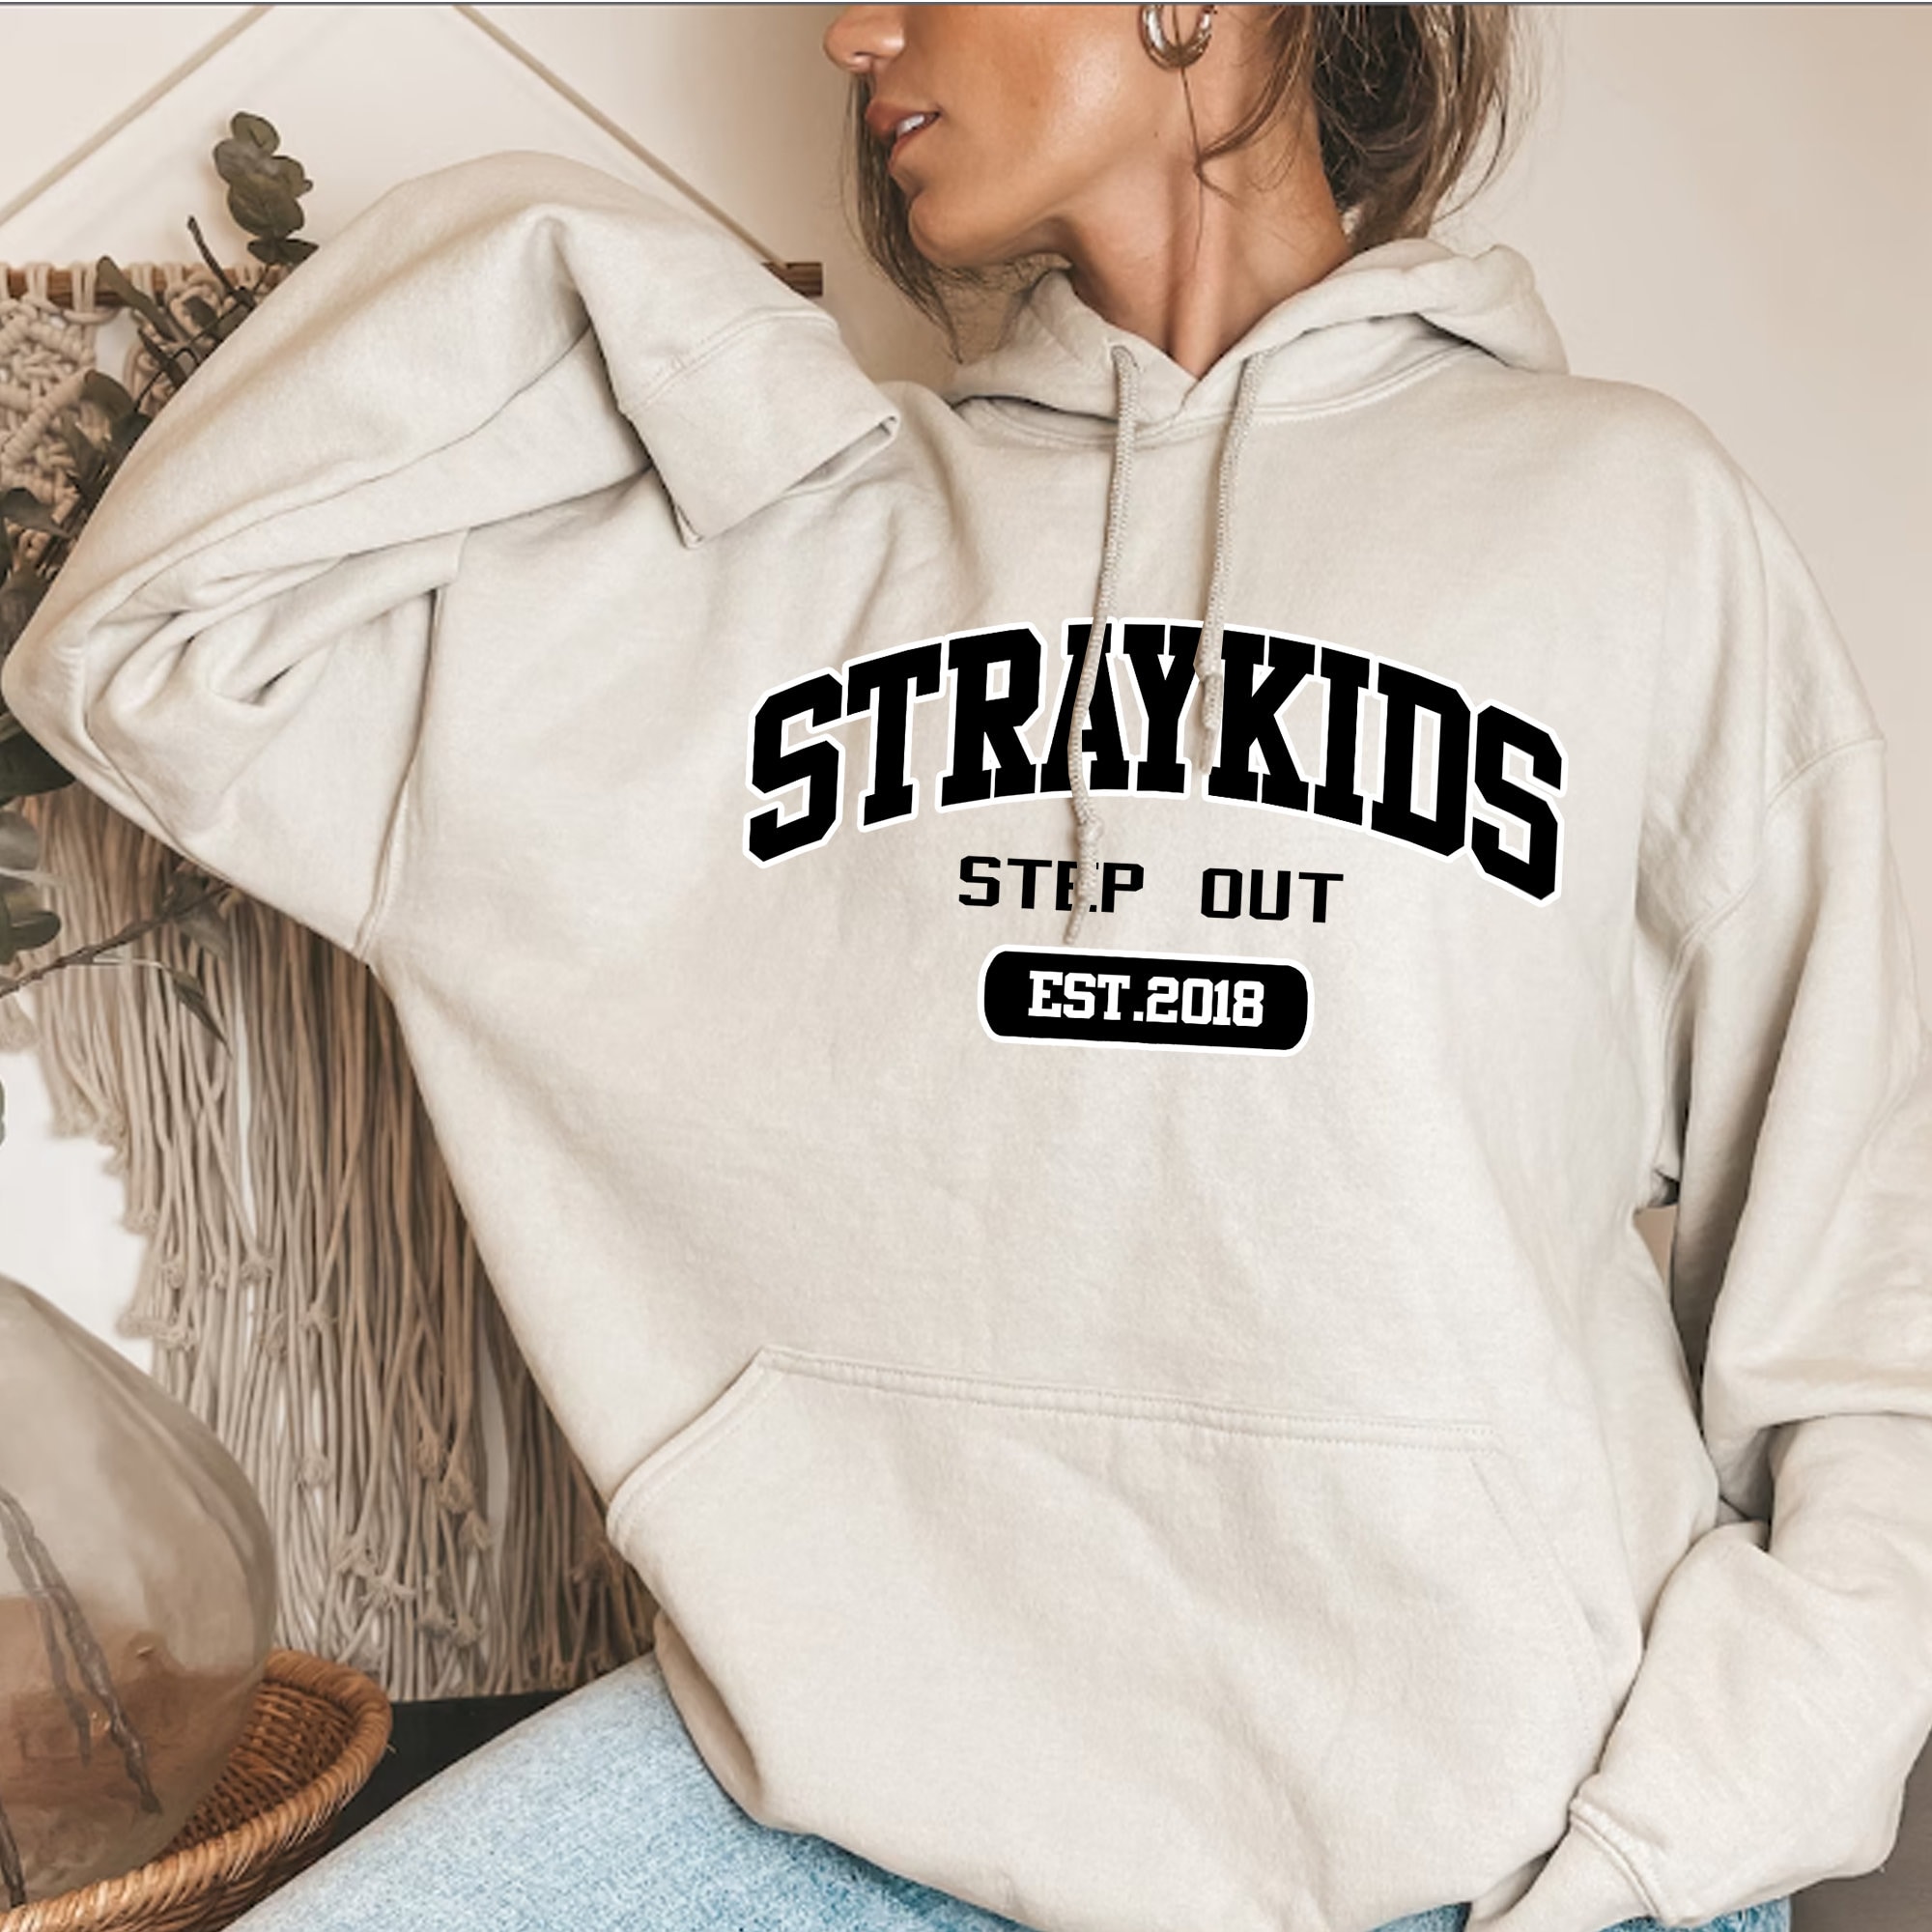 Stray Kids ROCK-STAR Album Tracklist Sweatshirt, Stray Kids 樂-STAR Shirt,  Stray Kids Skz Tee, Skz Rock Star Bang Chan, Lee Know, Changbin -   Denmark